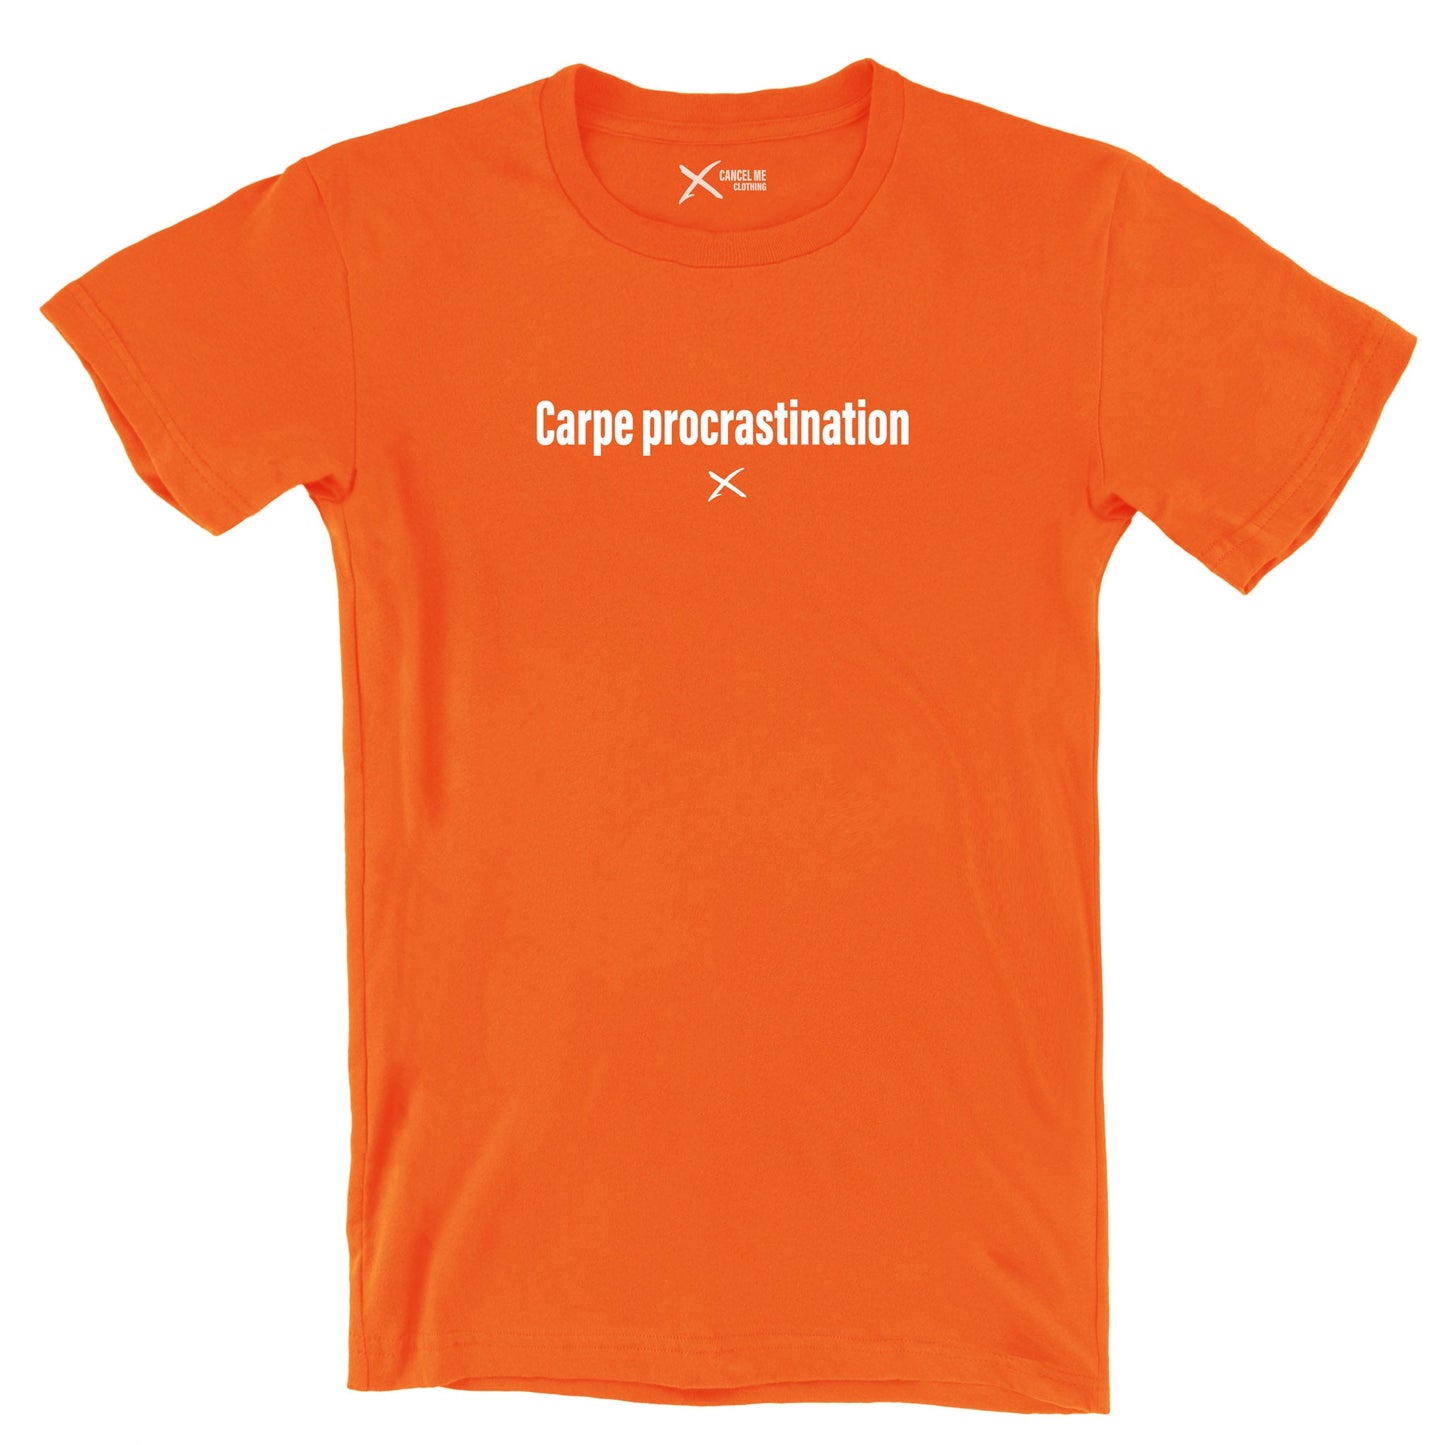 Carpe procrastination - Shirt